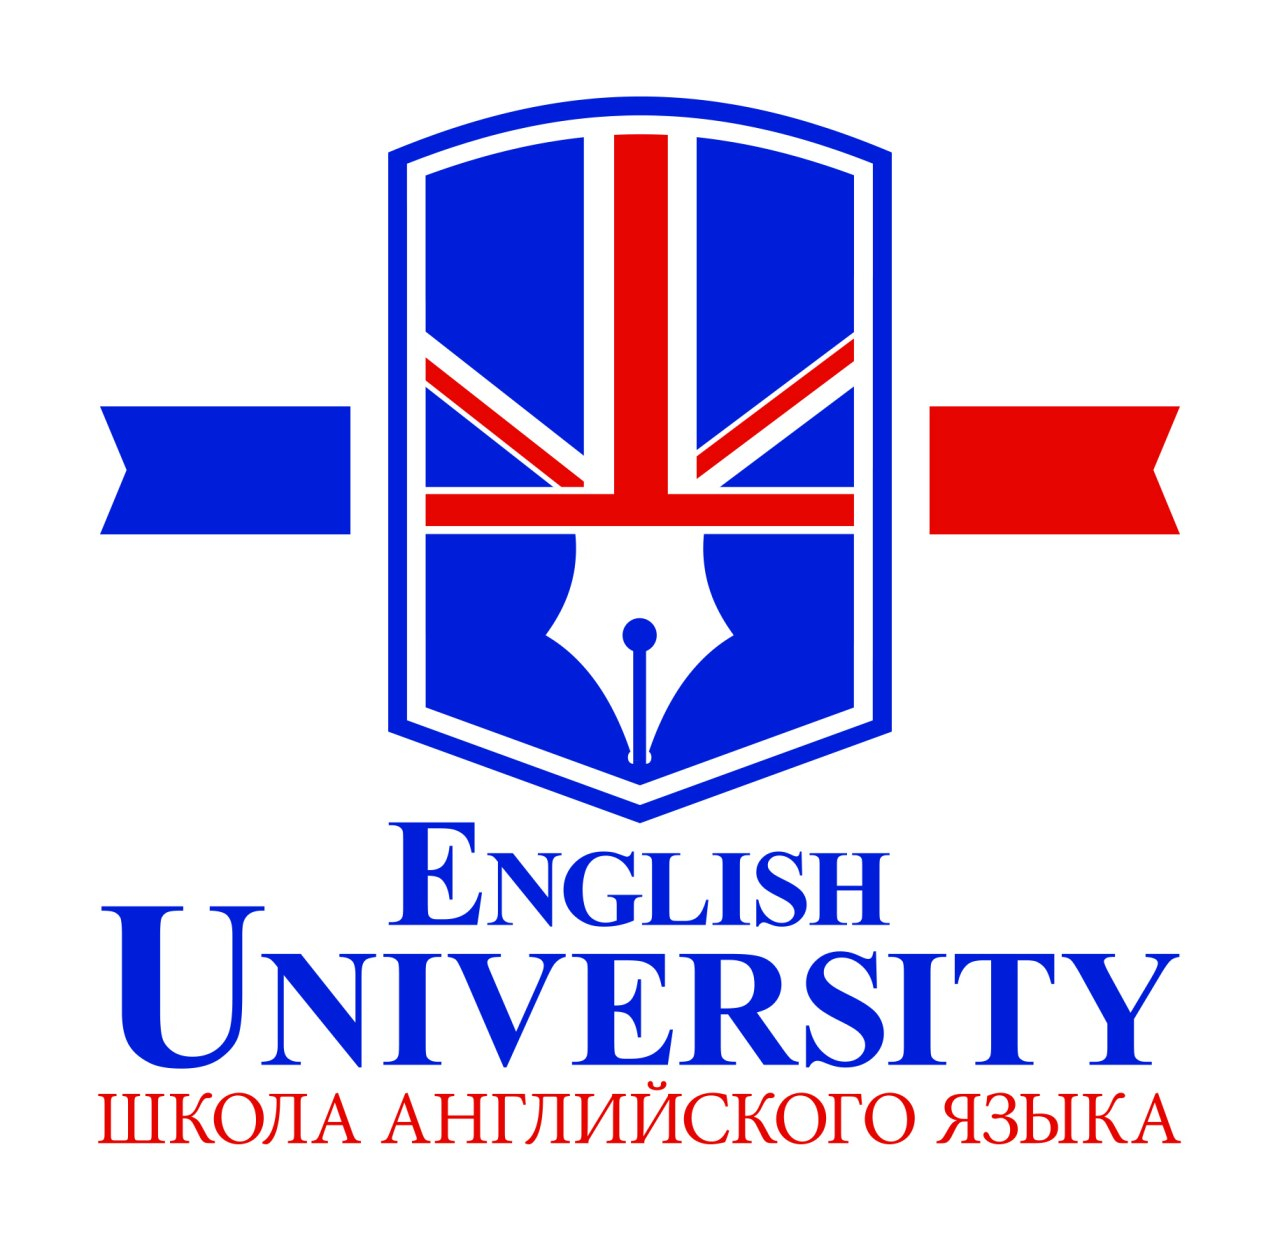 English university